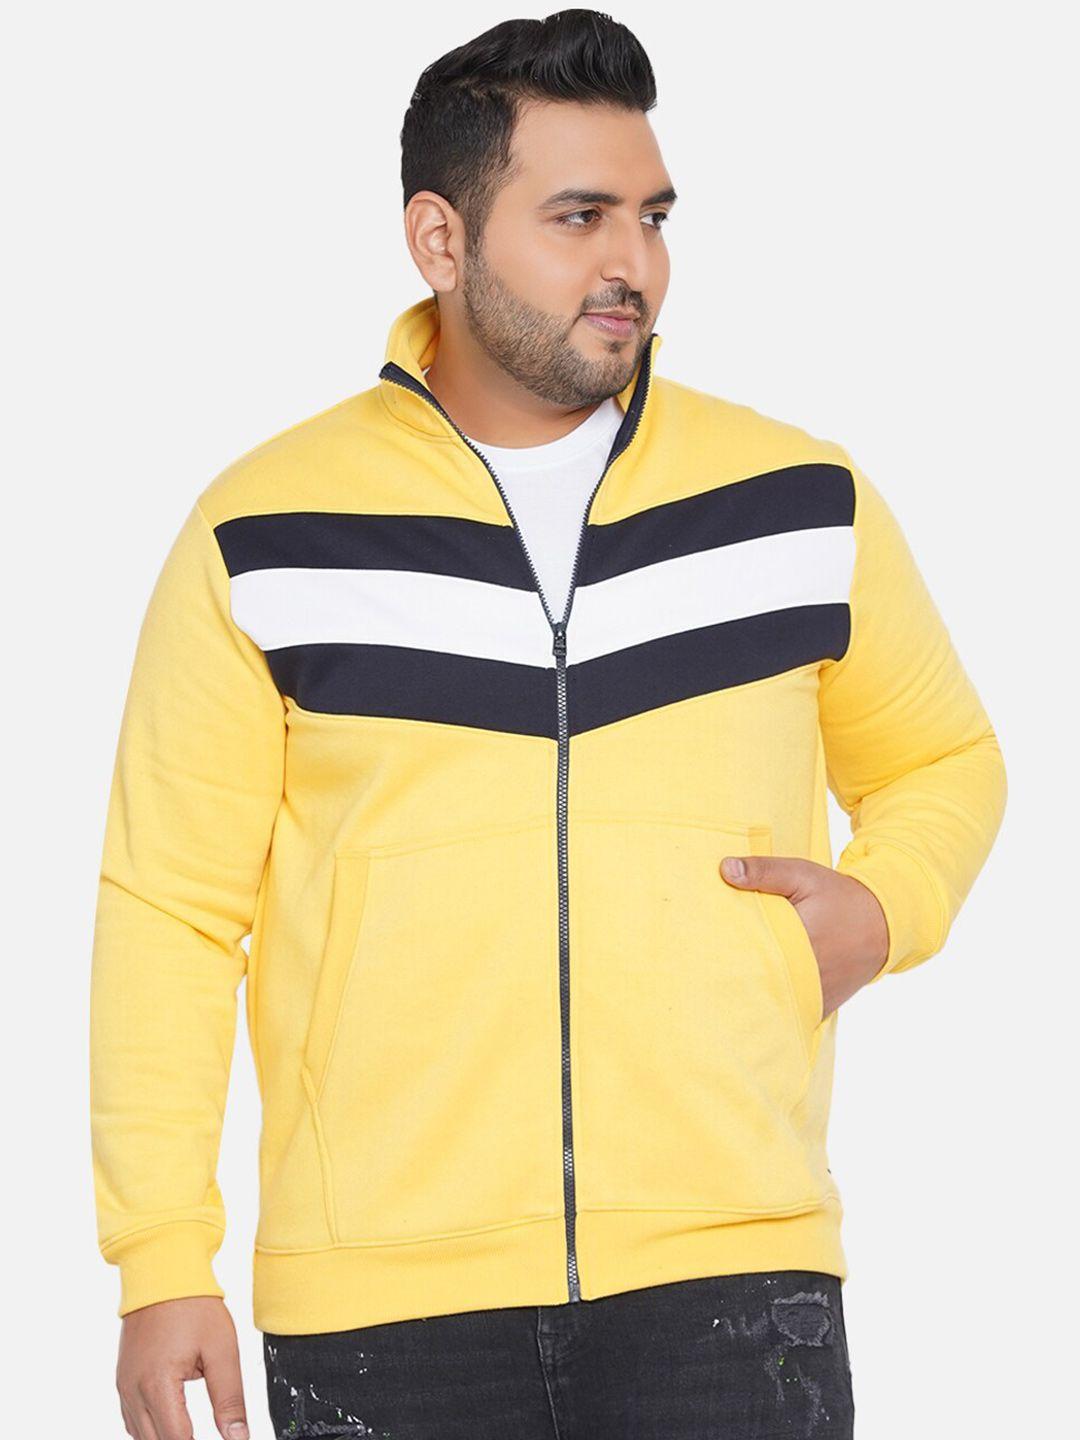 john pride men yellow colourblocked plus size sweatshirt